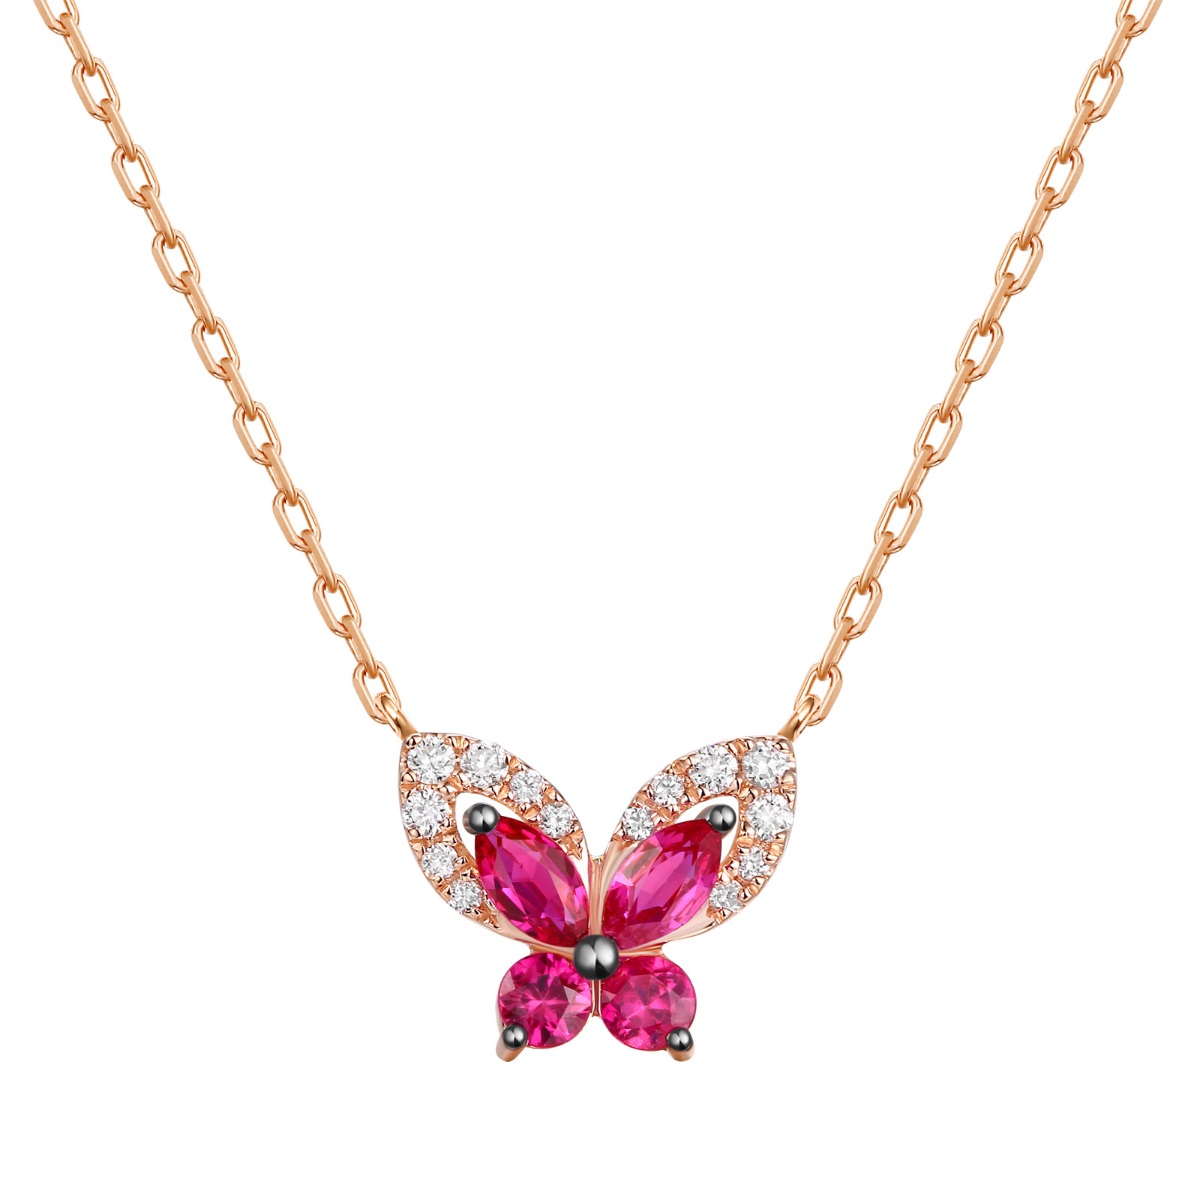 NL36451RUW – 18K Rose Gold  Diamond and Gemstone Necklace, 0.38 TCW